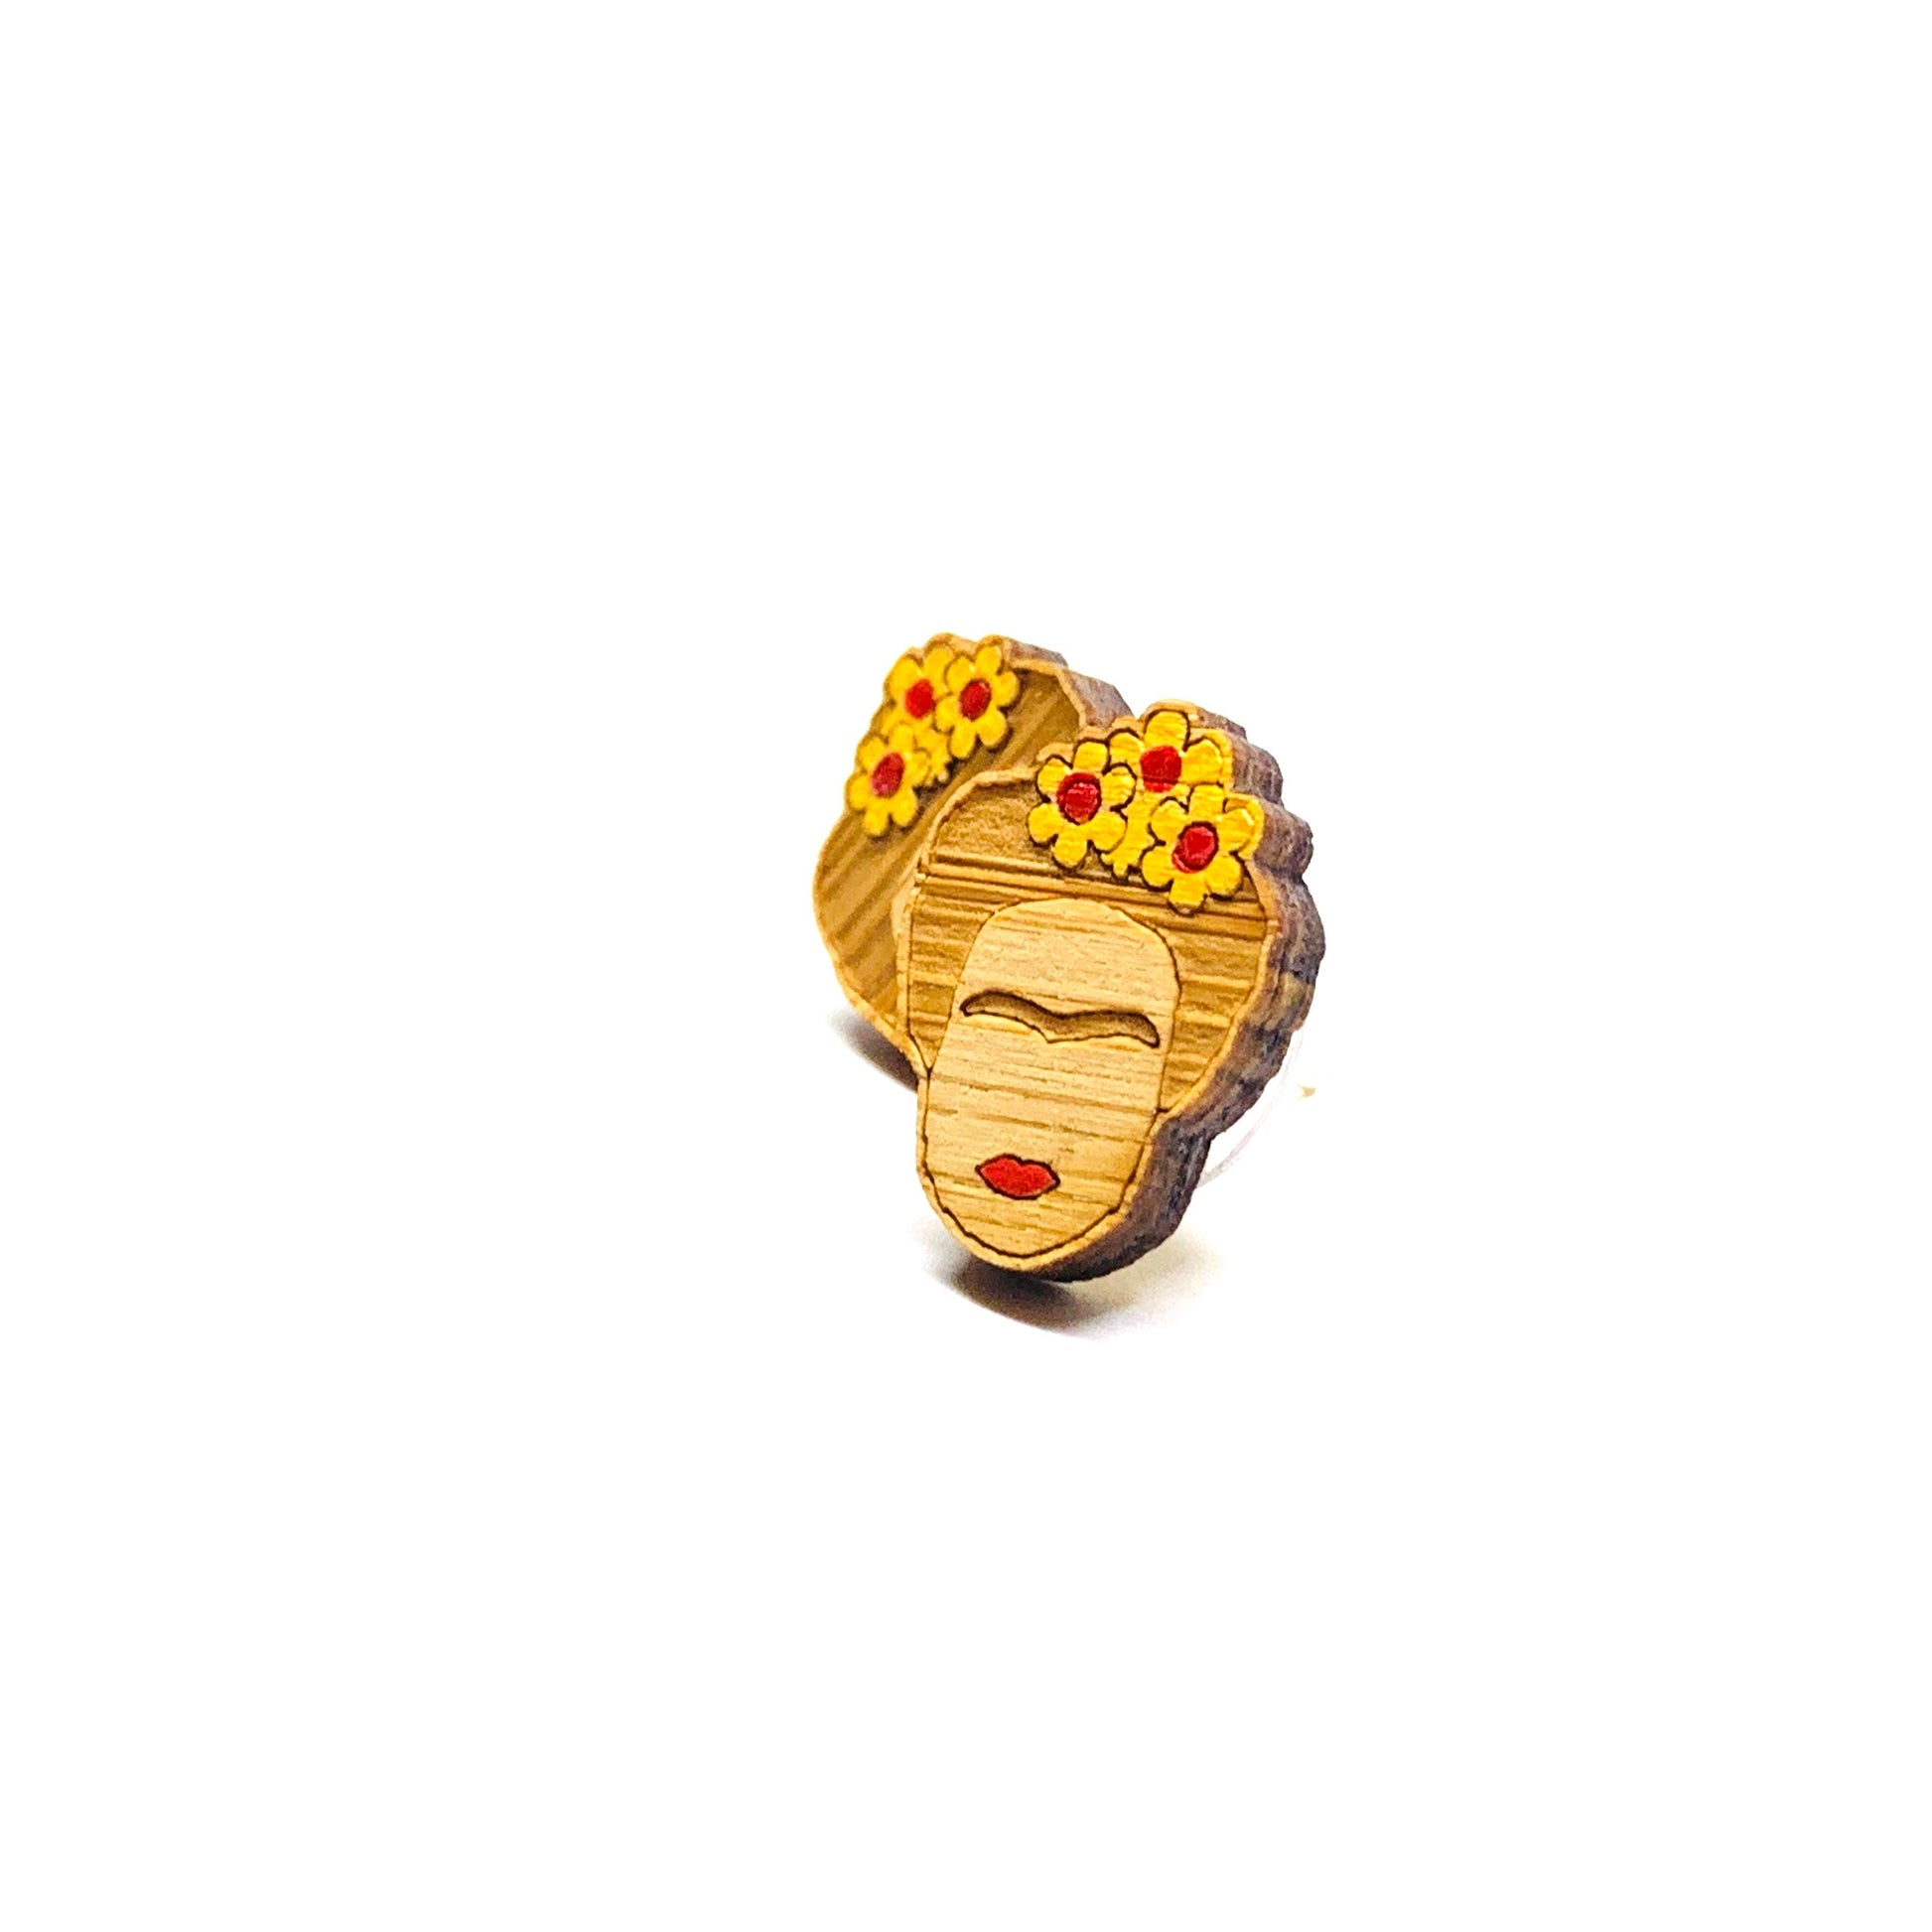 Cool Frida Earrings Stud Mini Bamboo Wood HandPainted Yellow Flowers Girls Summer Fashion Boho Minimalist Jewelry Cute Gift Idea Fridalovers